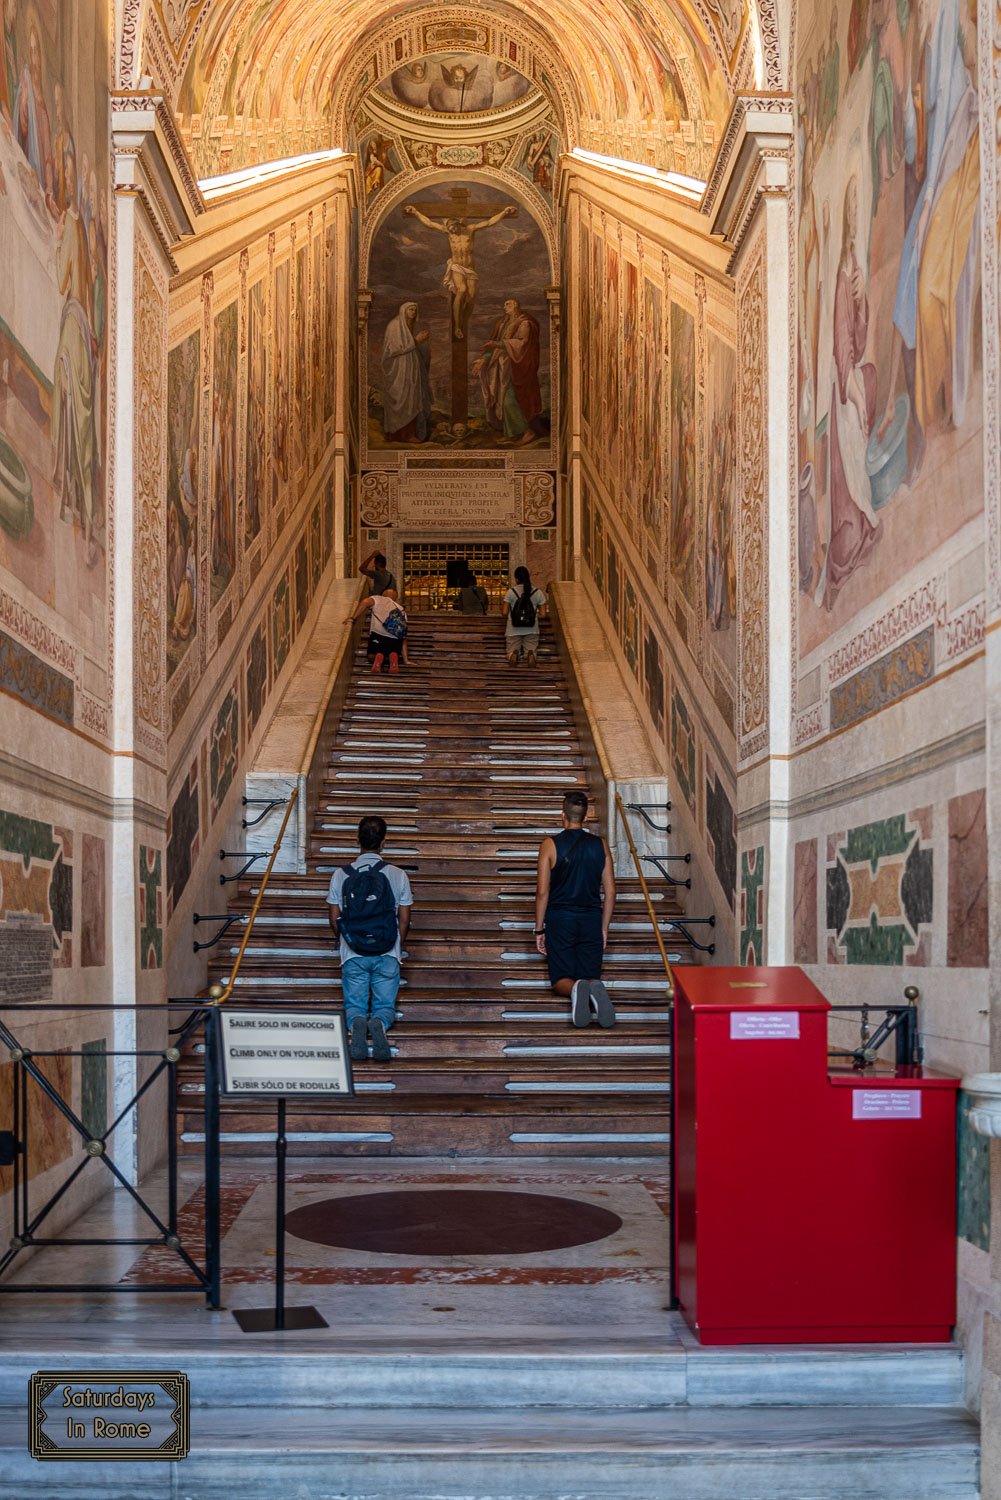 Unique Churches in Rome - Scala Sancta